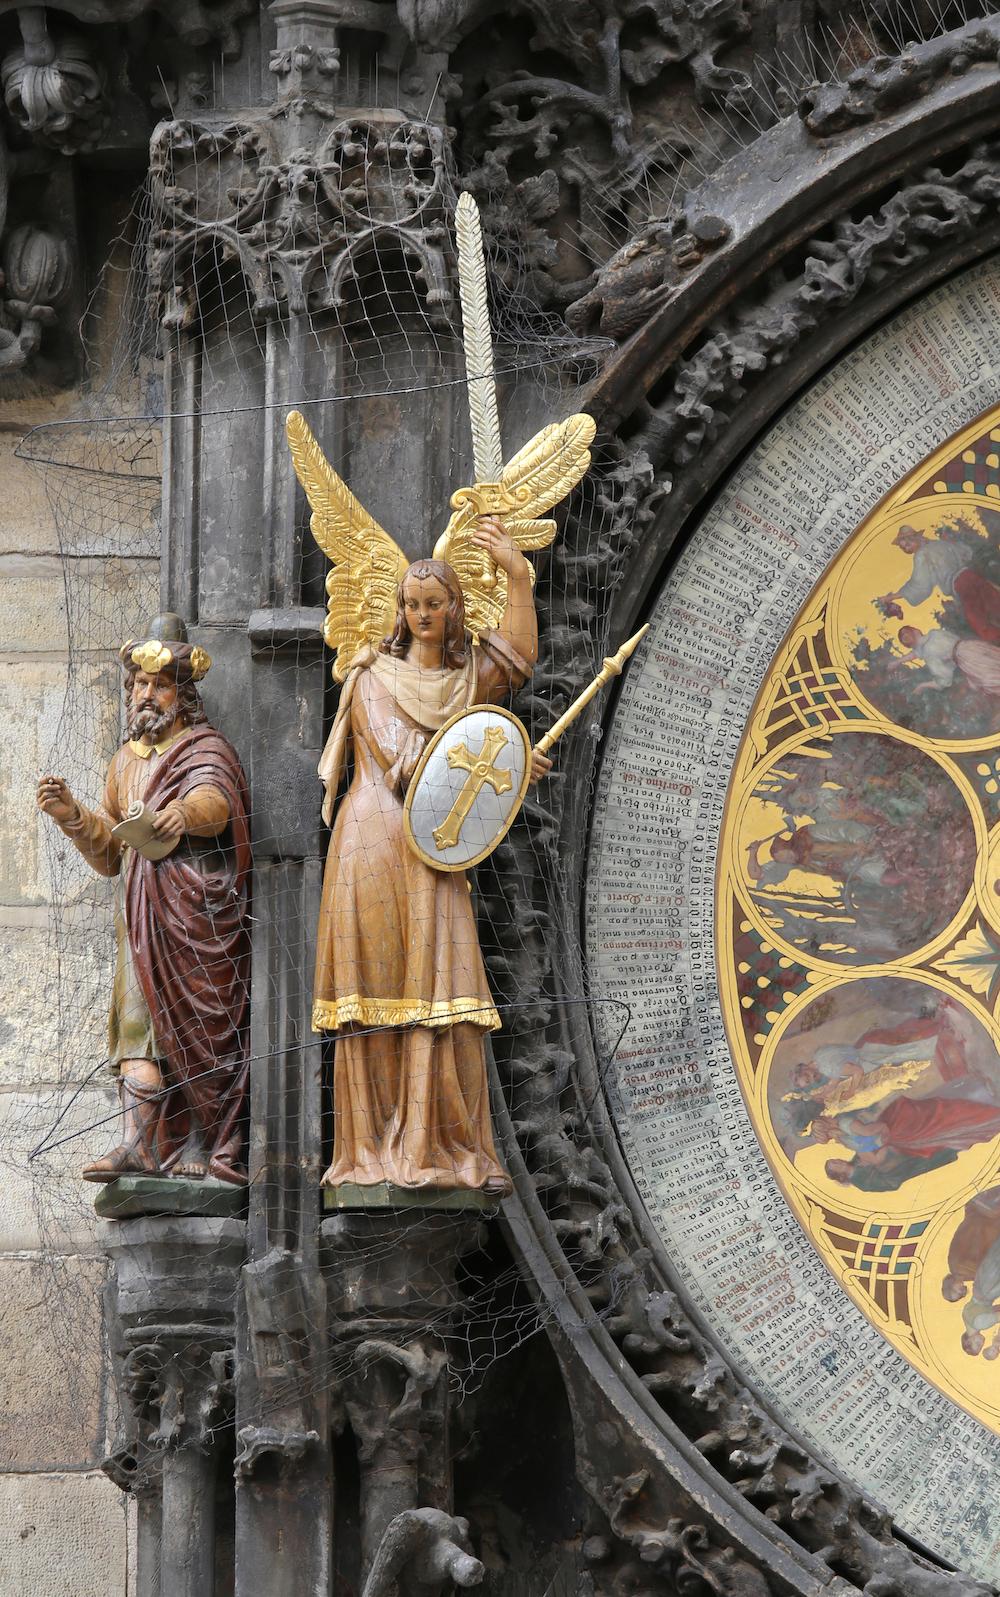 Philosopher and Archangel Michael statues beside the calendar face. (ChiccoDodiFC/Shutterstock)